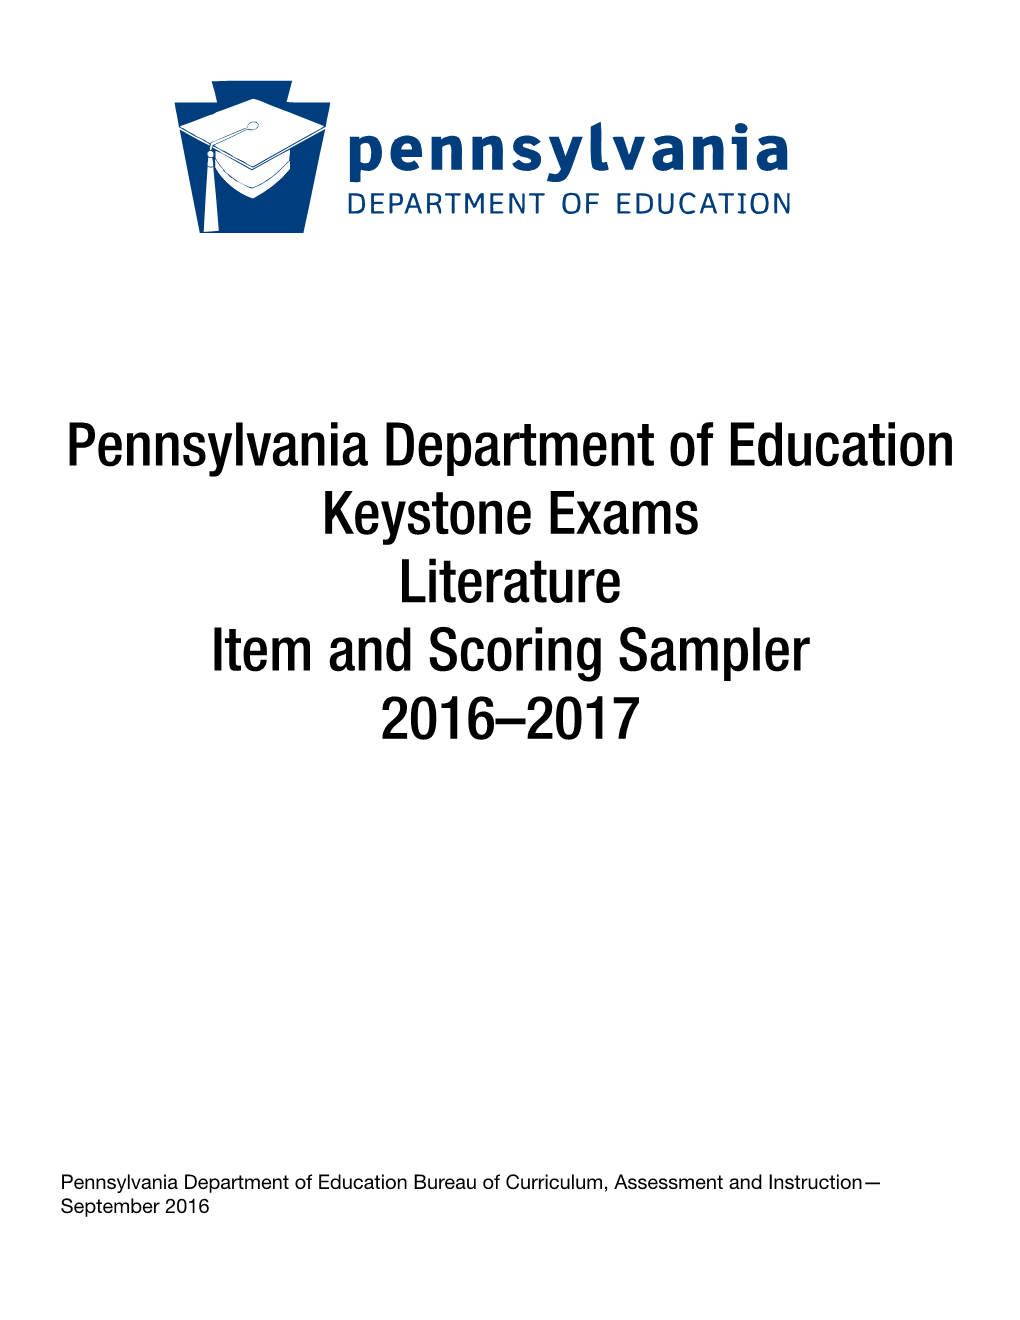 Keystone Exams Literature Item and Scoring Sampler 2016–2017